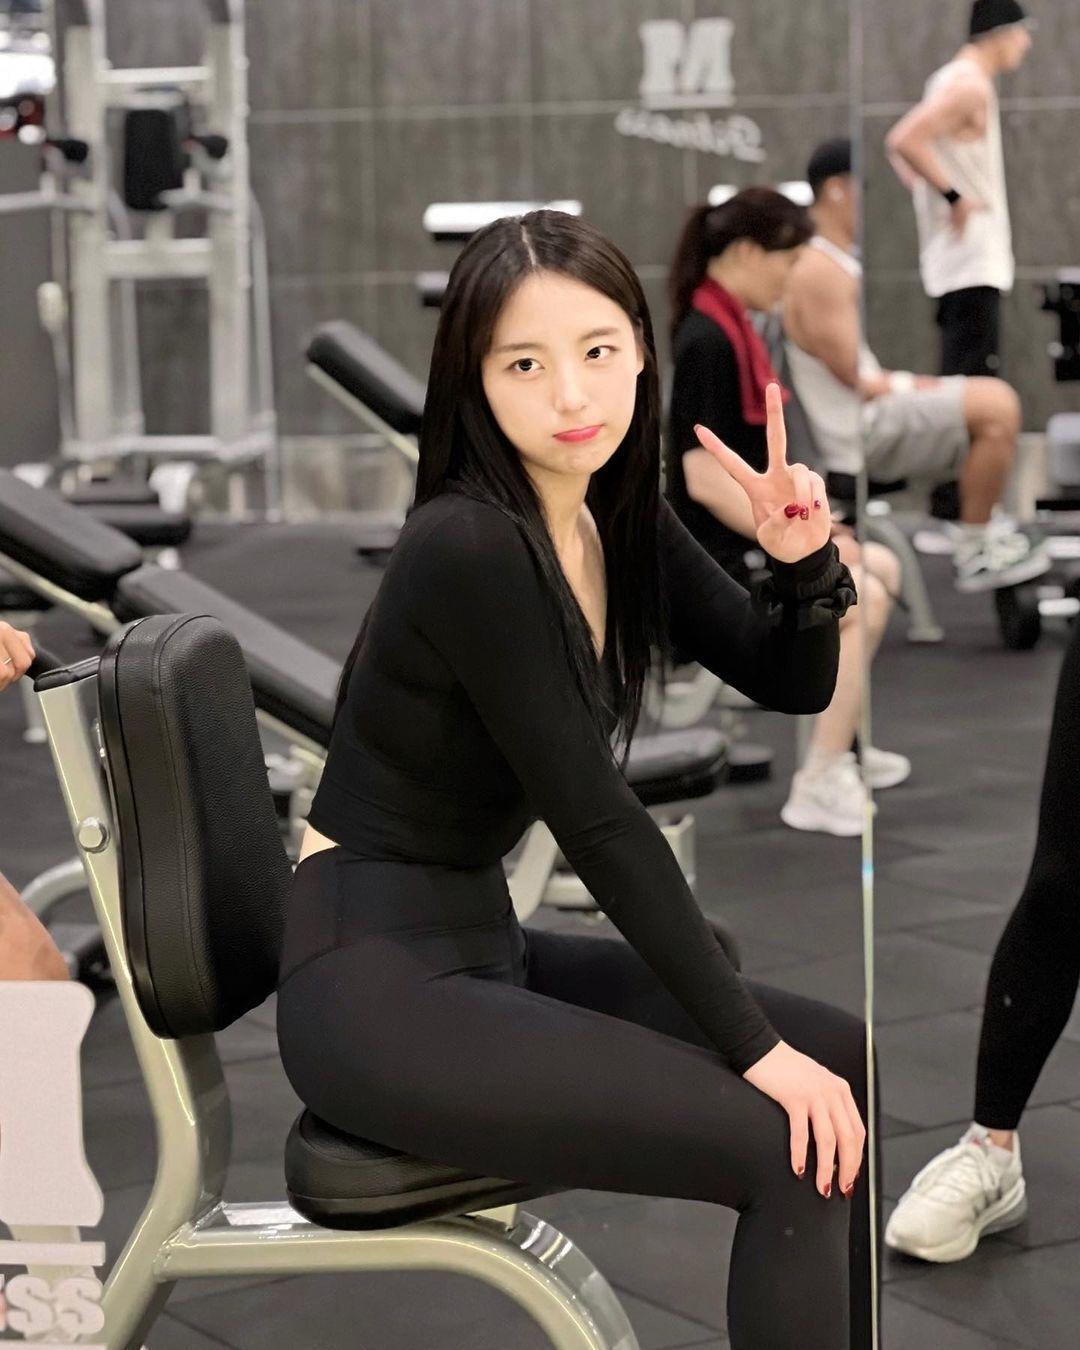 Ha Jiwon's cheerleader who works out